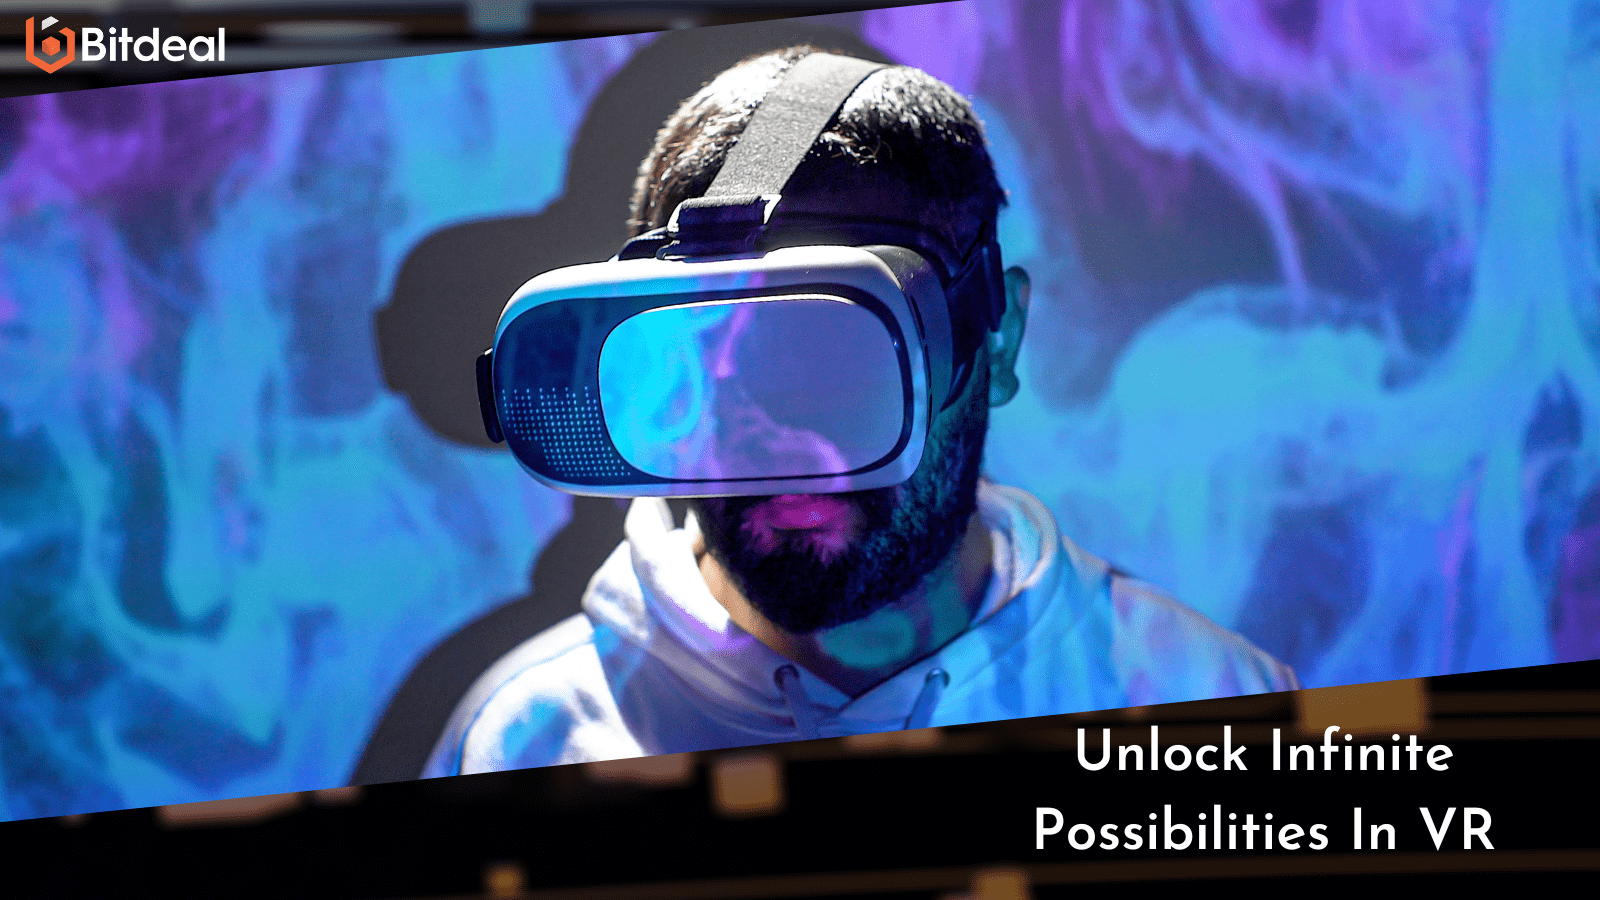 UY ALT

Possibilities In VR